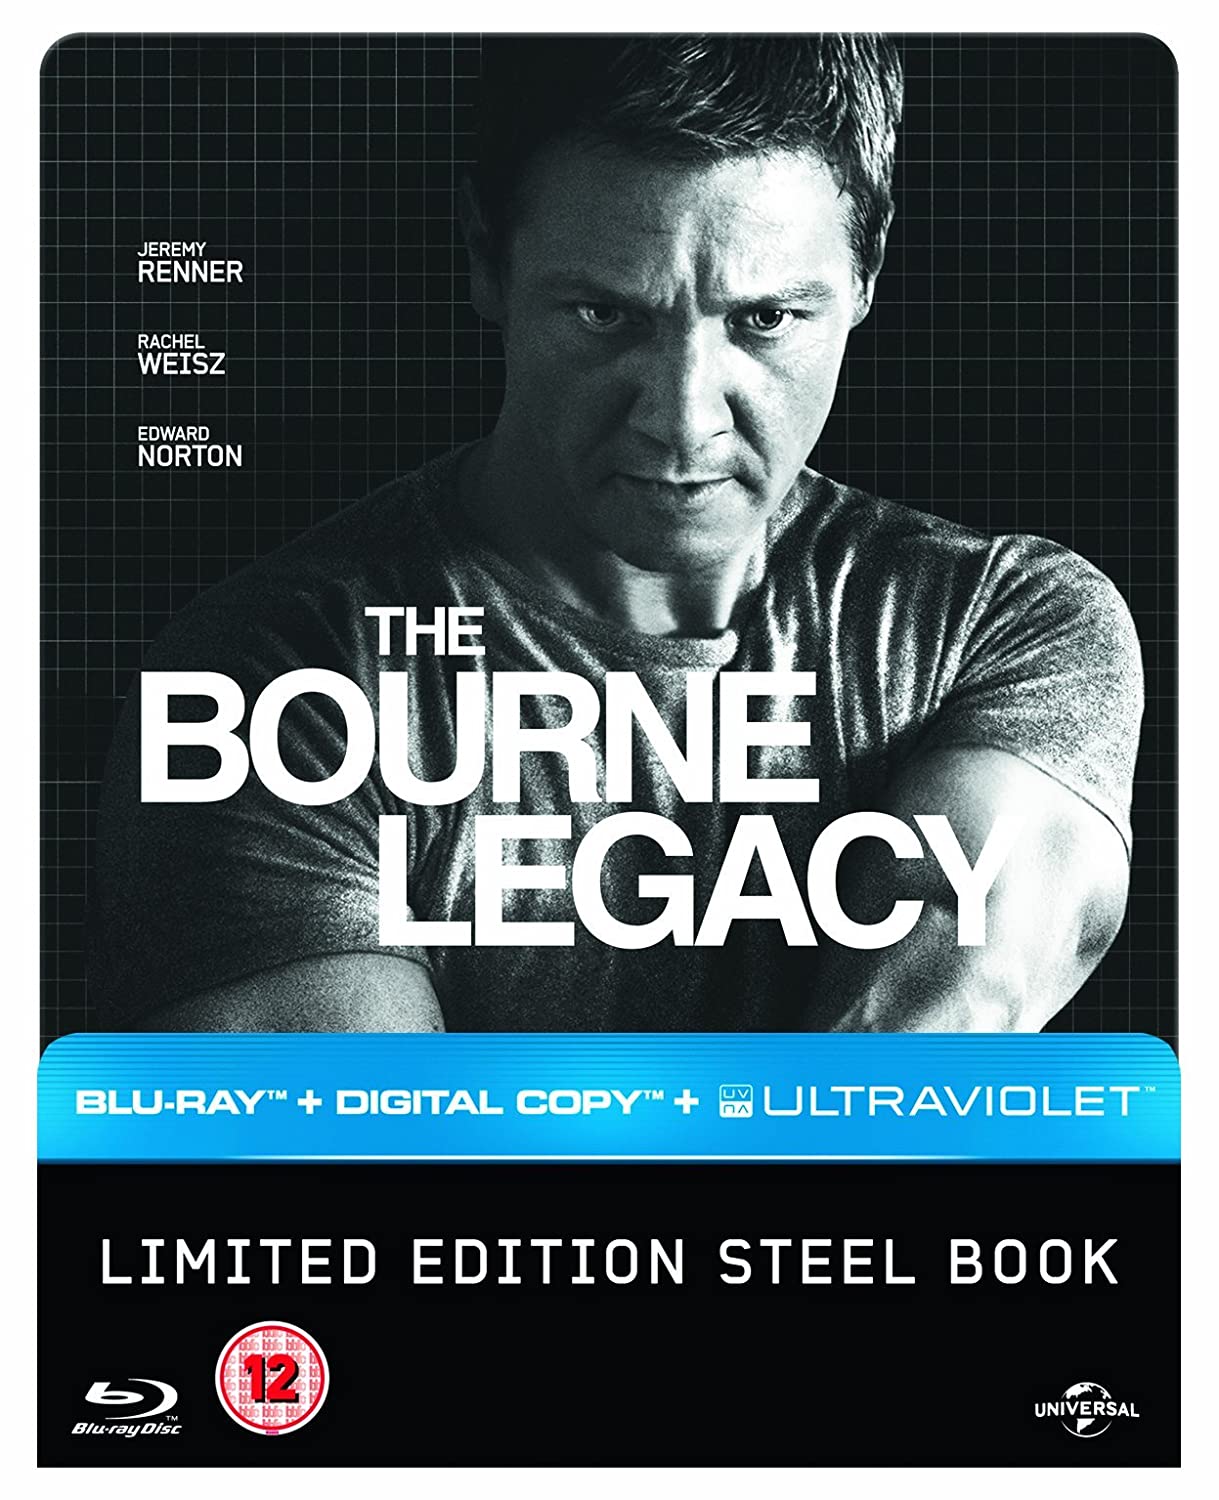 The Bourne Legacy Blu-ray + DVD (Limited Edition) Steelbook (REGION B LOCKED)